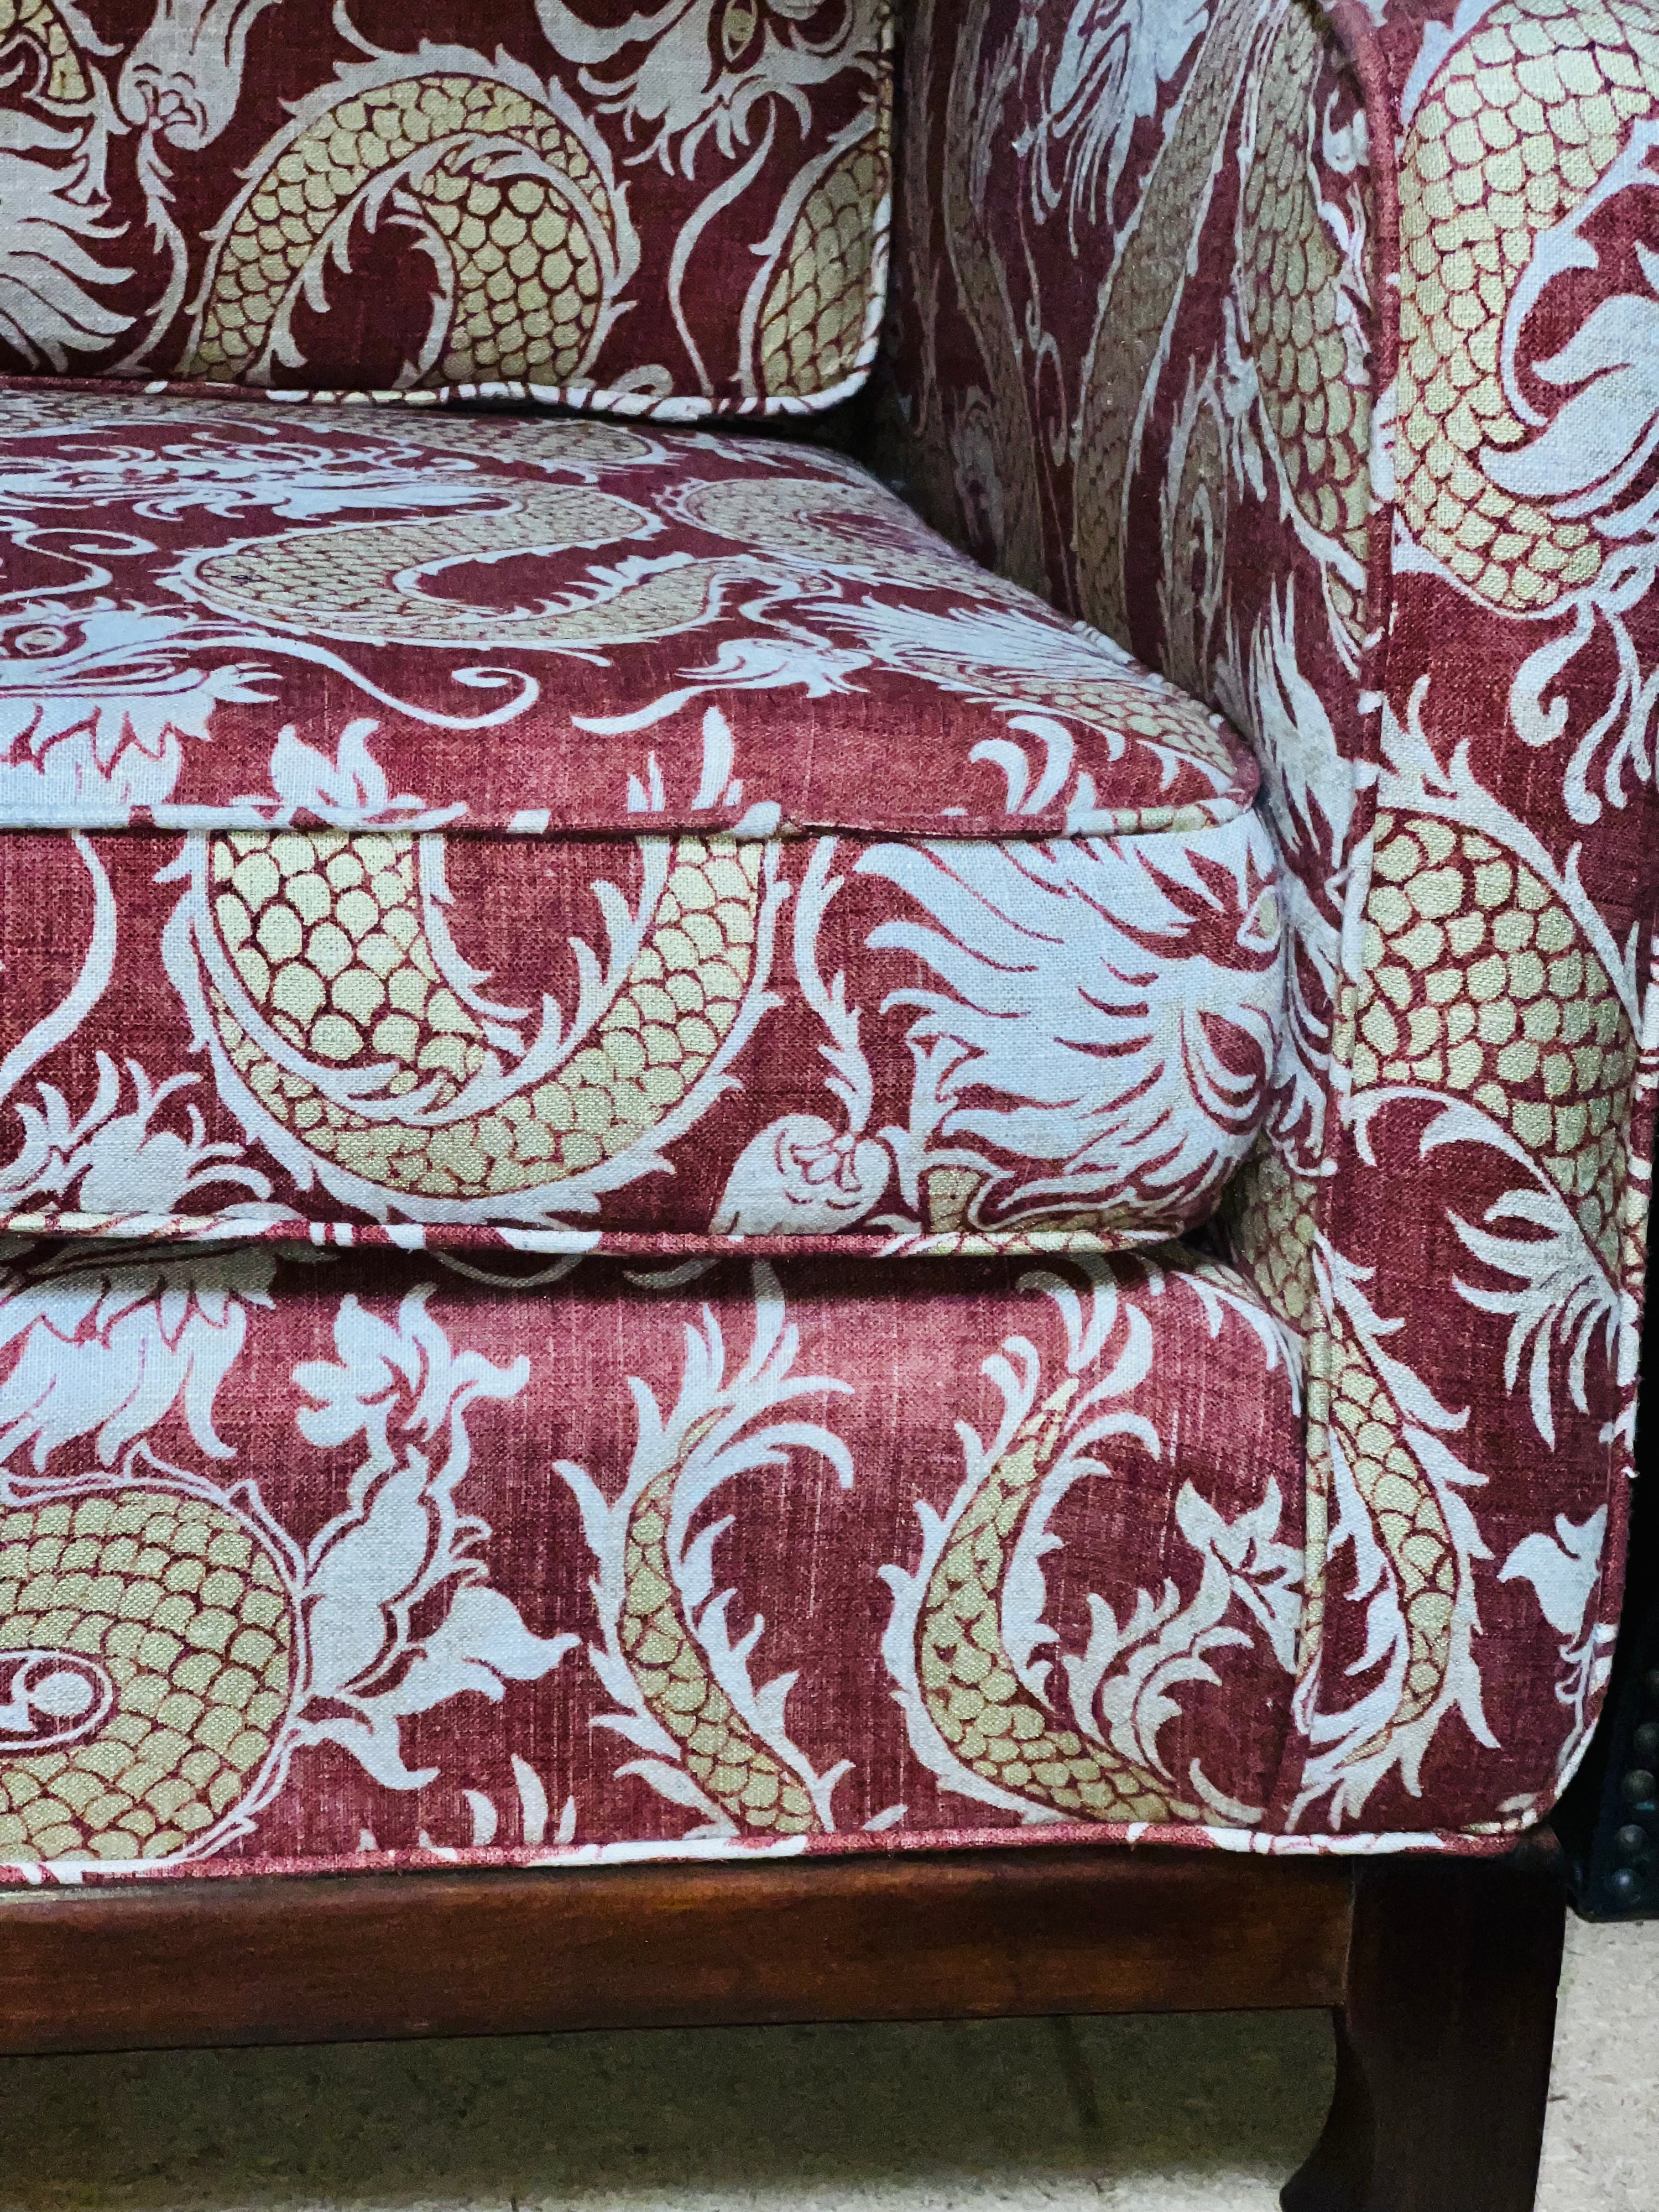 Vintage Hollywood Regency Reupholstered Linen Couch (SOLD)